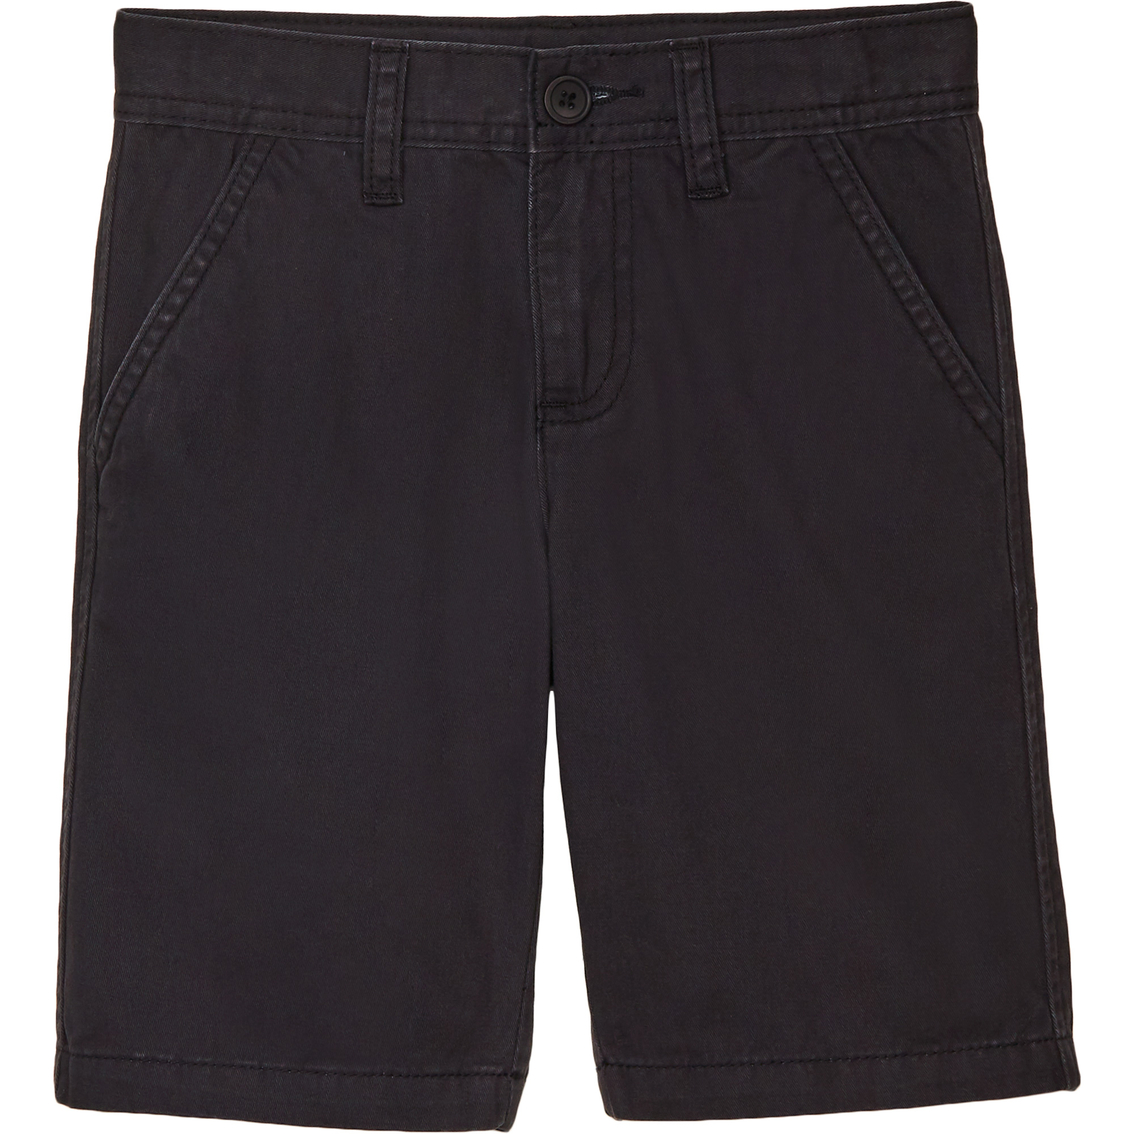 Buzz Cuts Boys Twill Shorts With Pockets | Boys 8-20 | Clothing ...